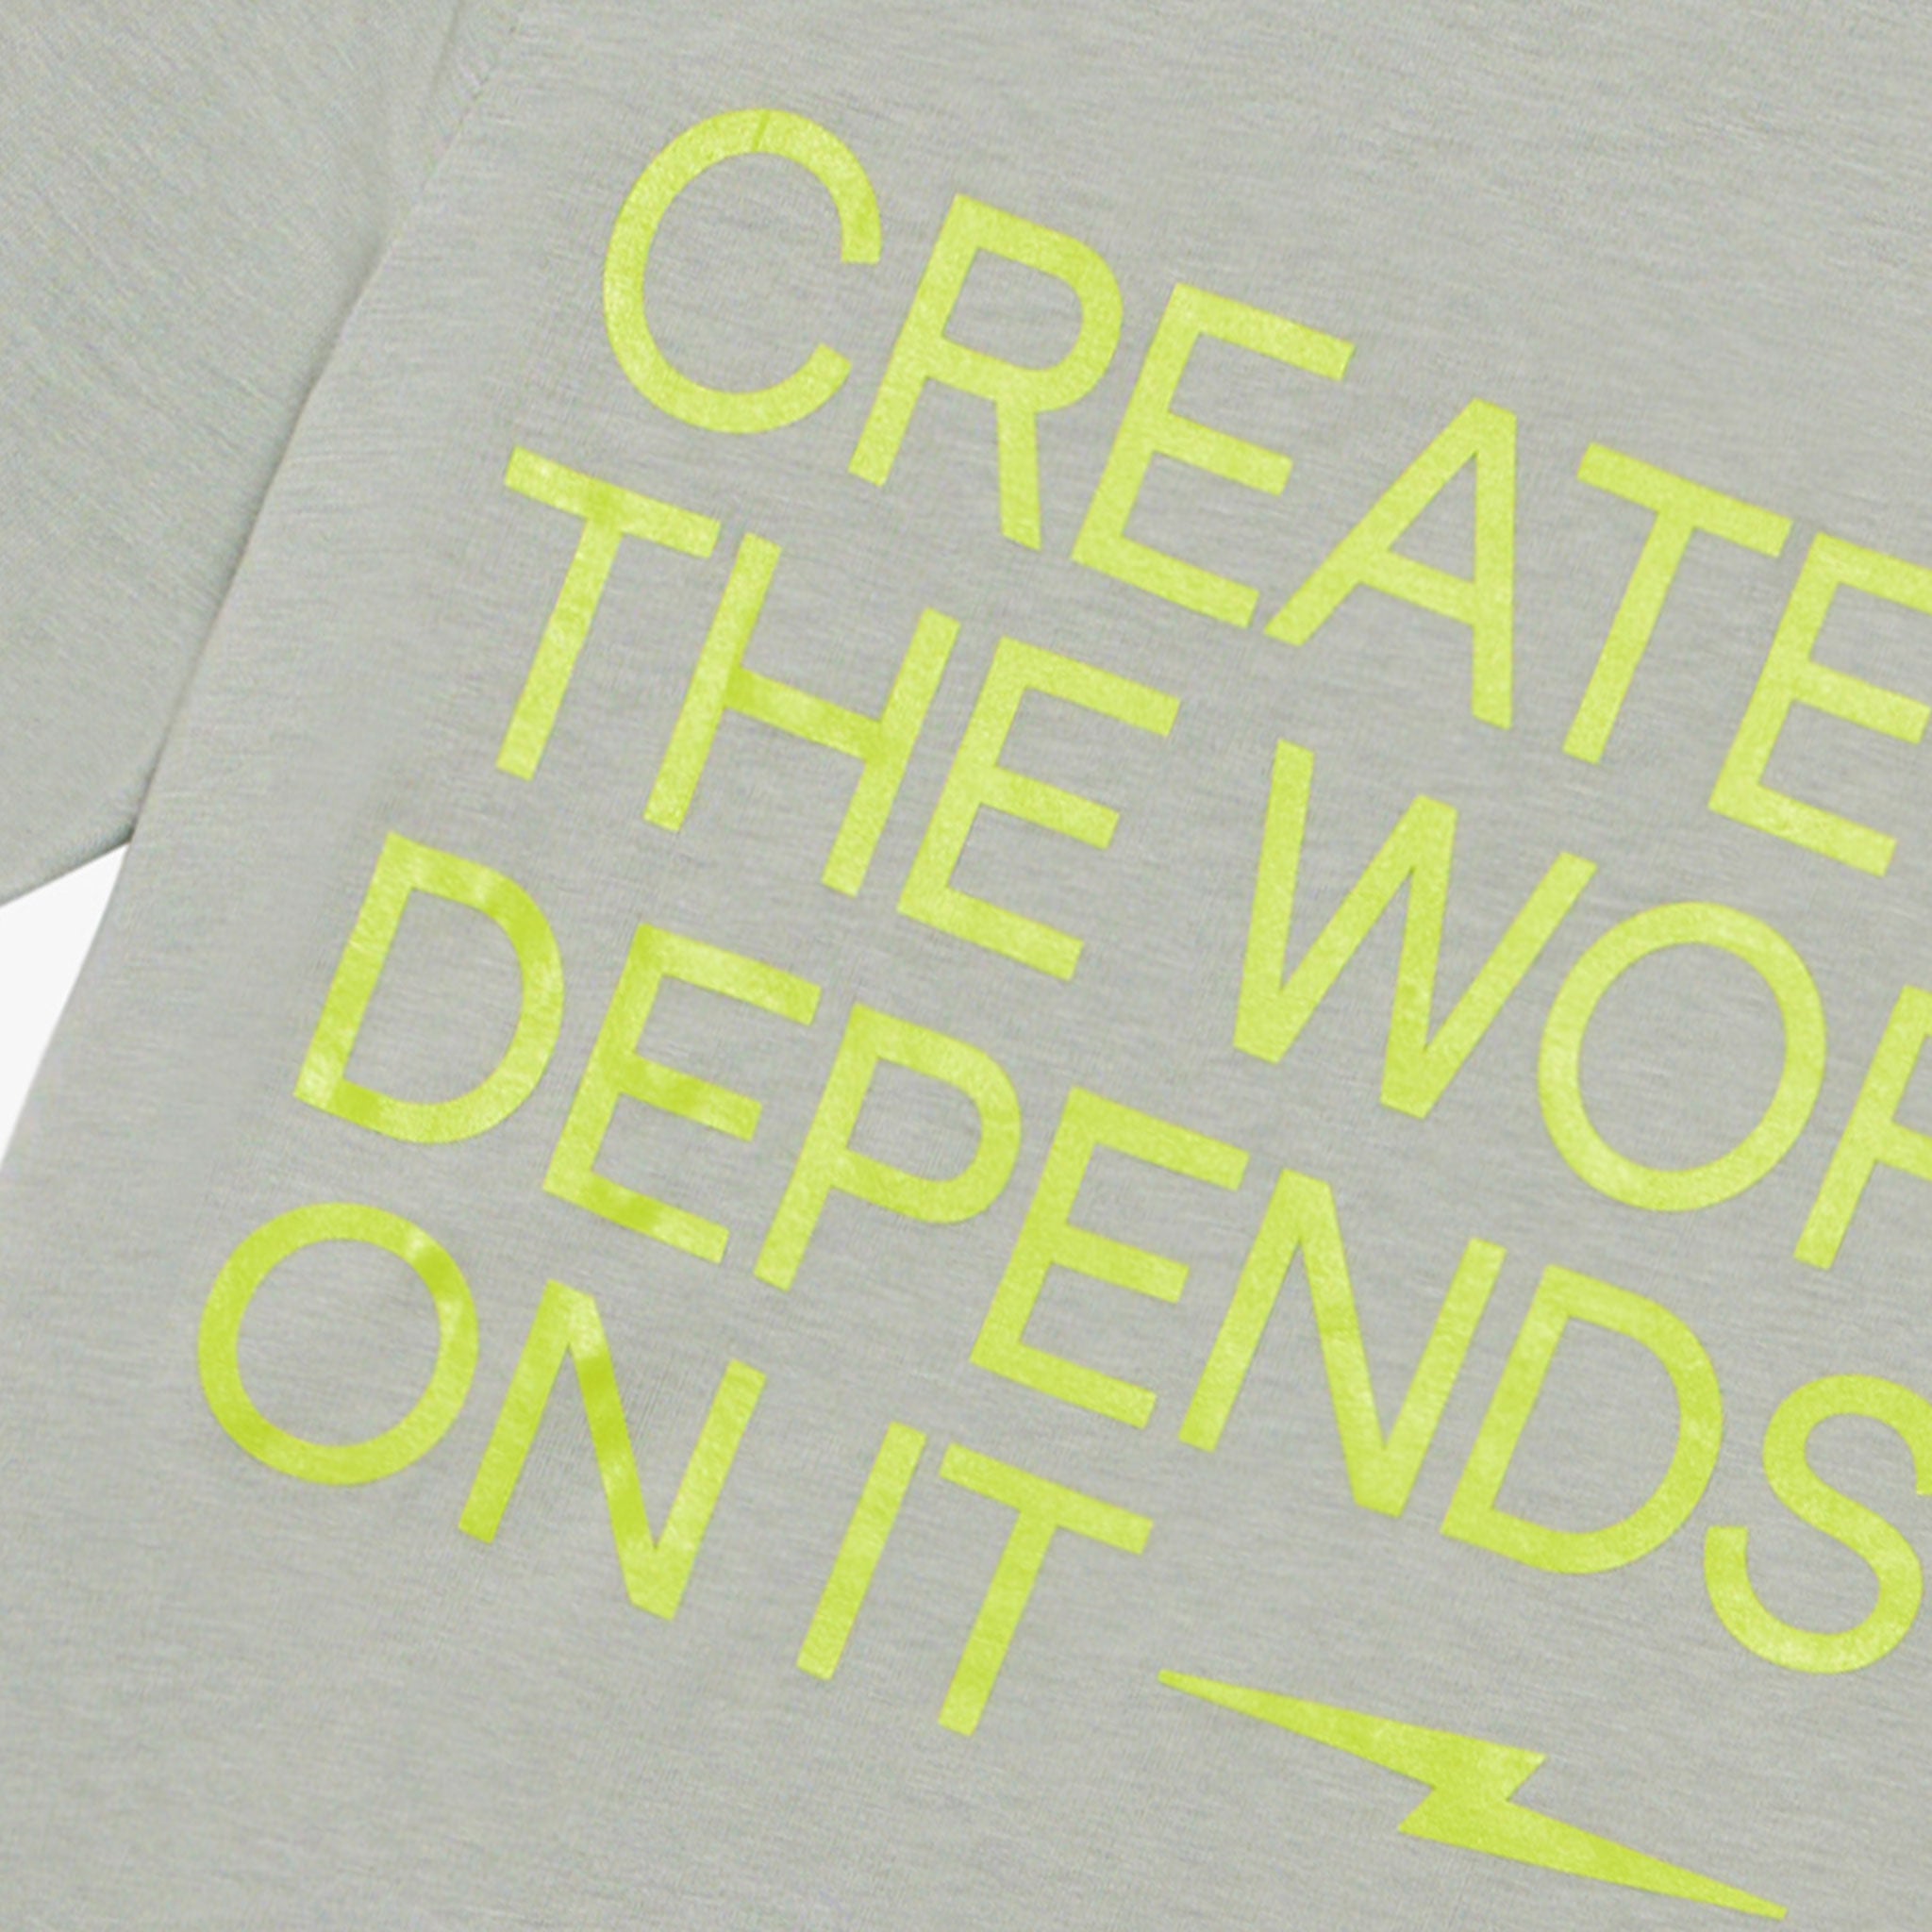 Women's LegacyTech T-Shirt - Slate - Create